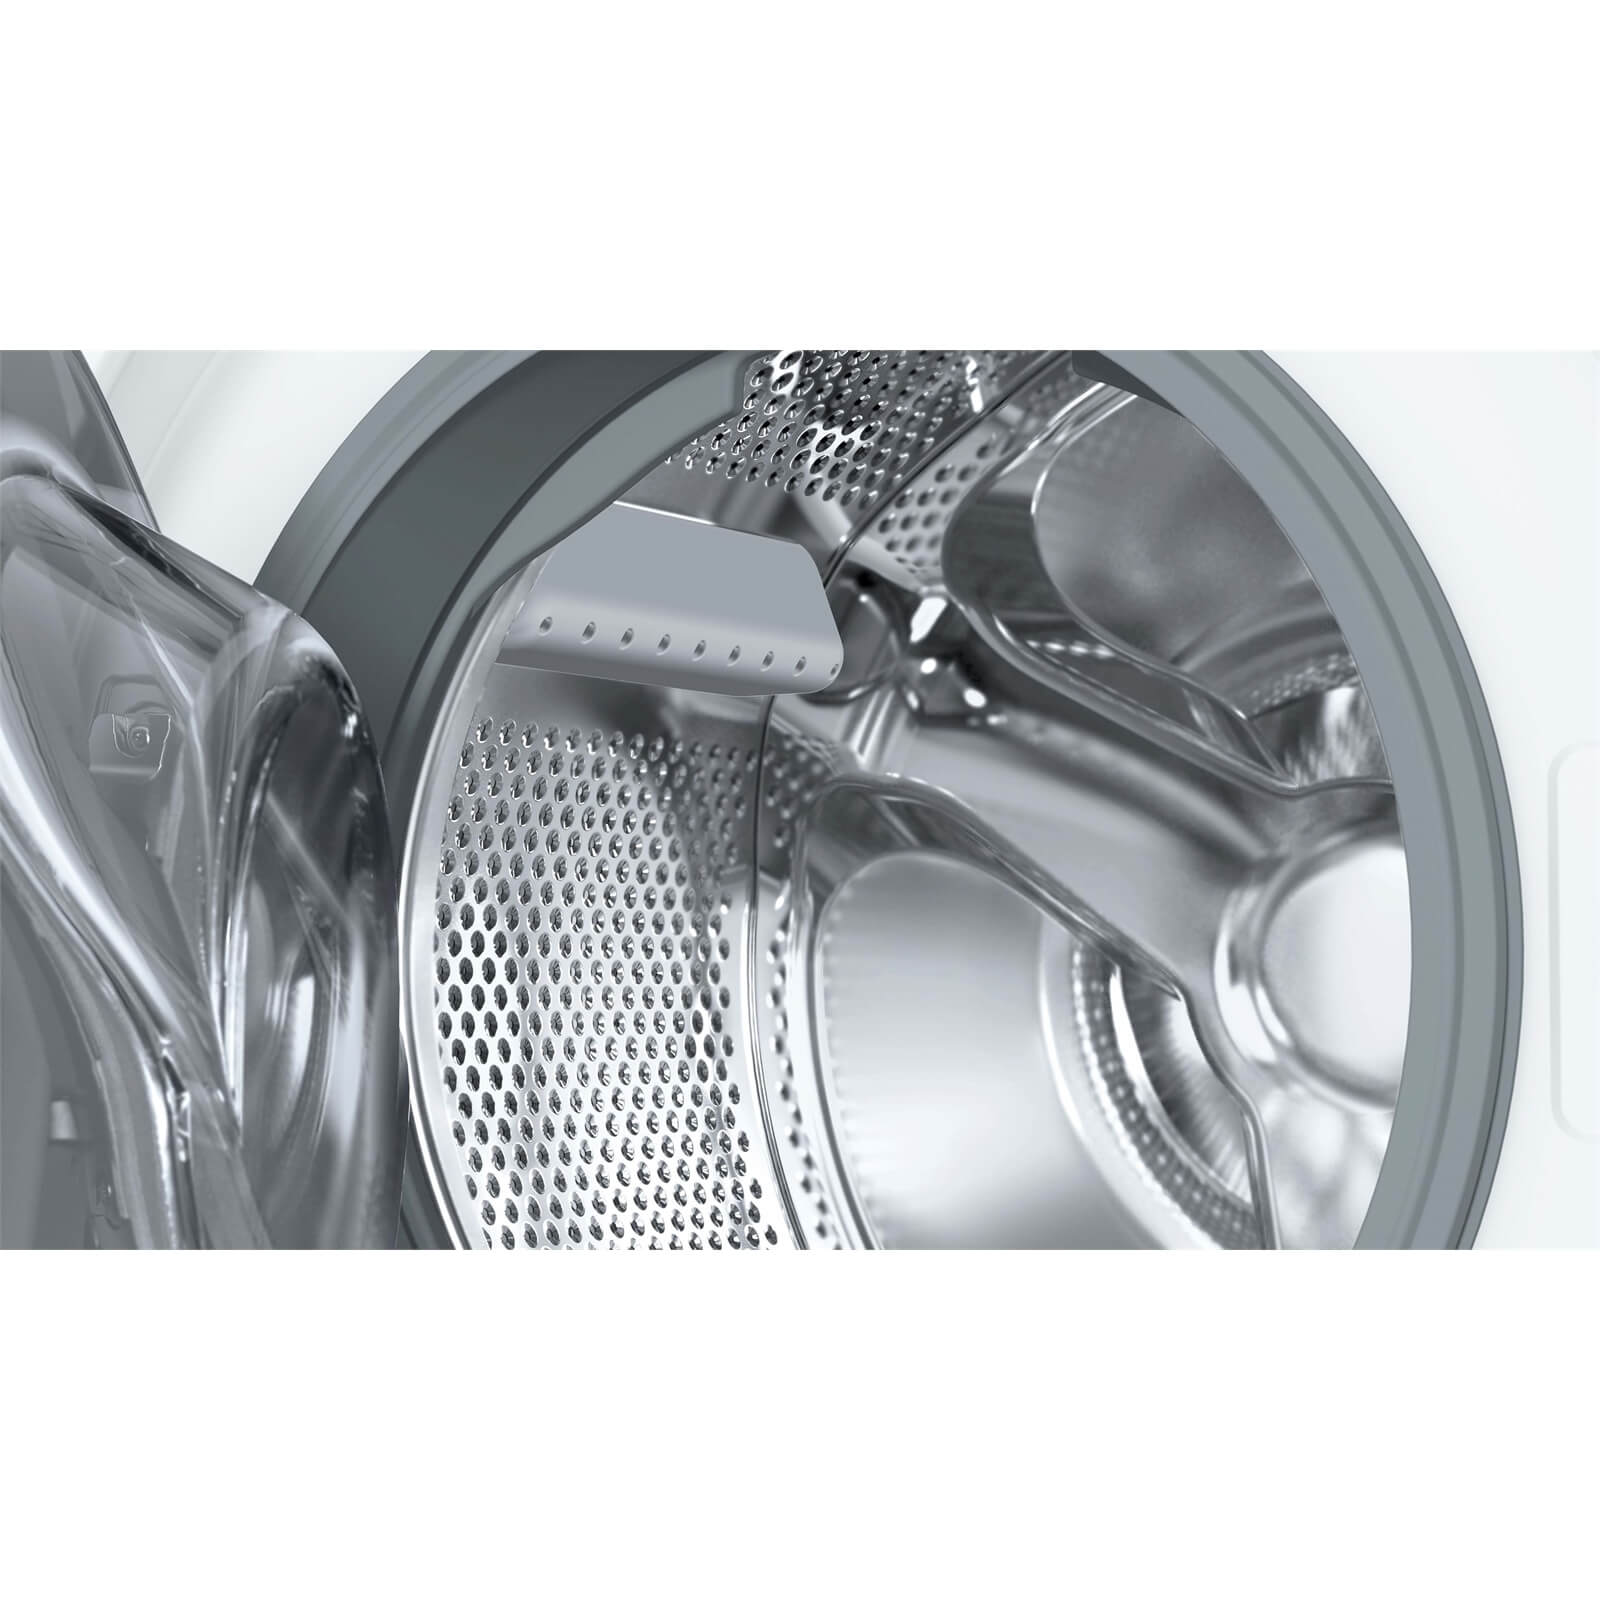 NEFF V6320X1GB Integrated Washer Dryer